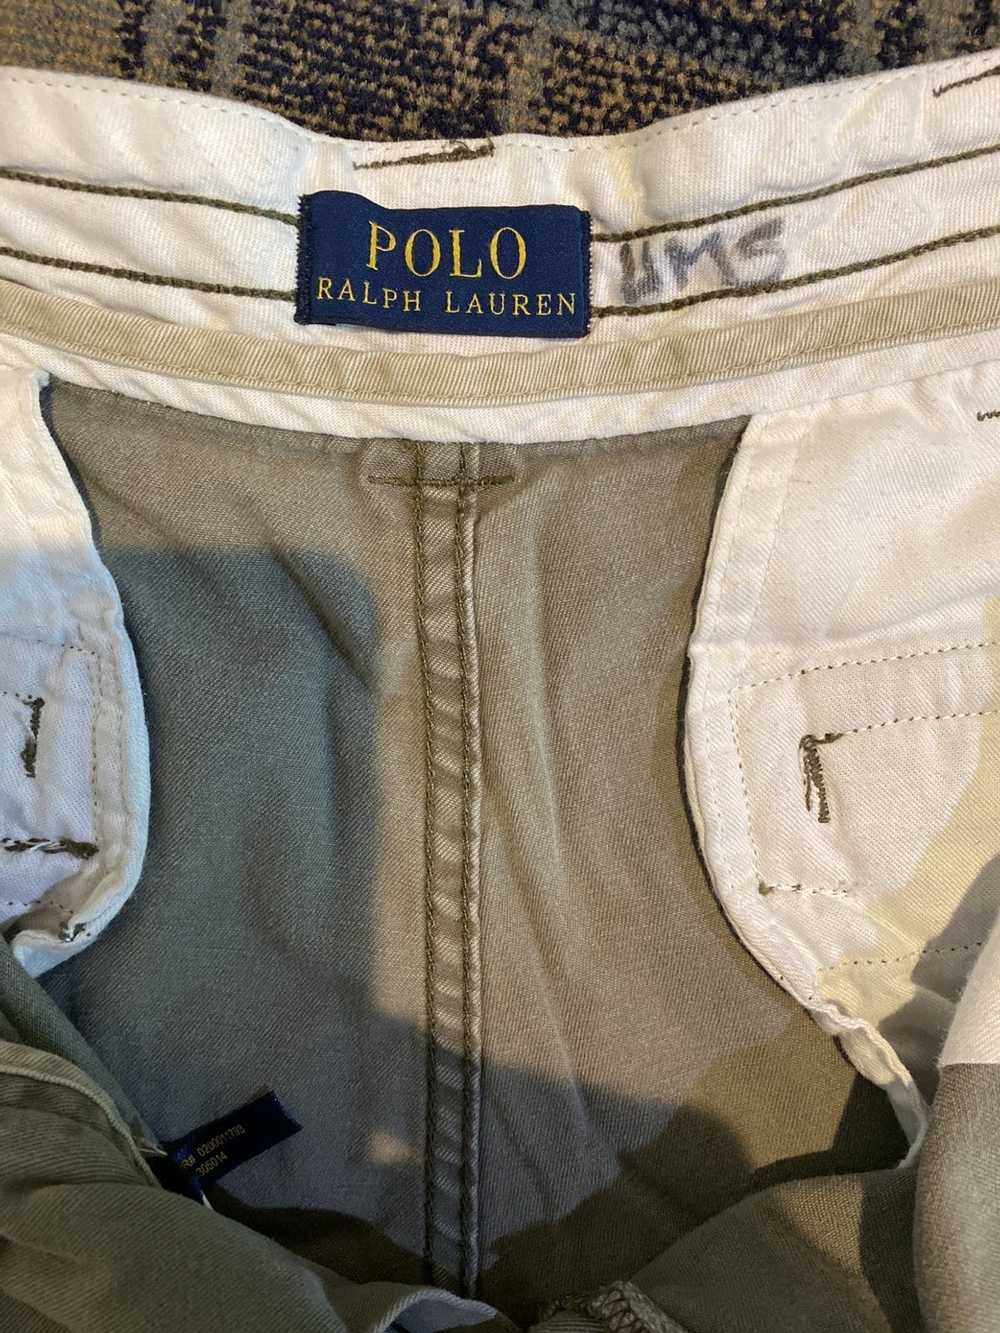 Polo Ralph Lauren Polo Ralph Lauren Khaki Shorts - image 2